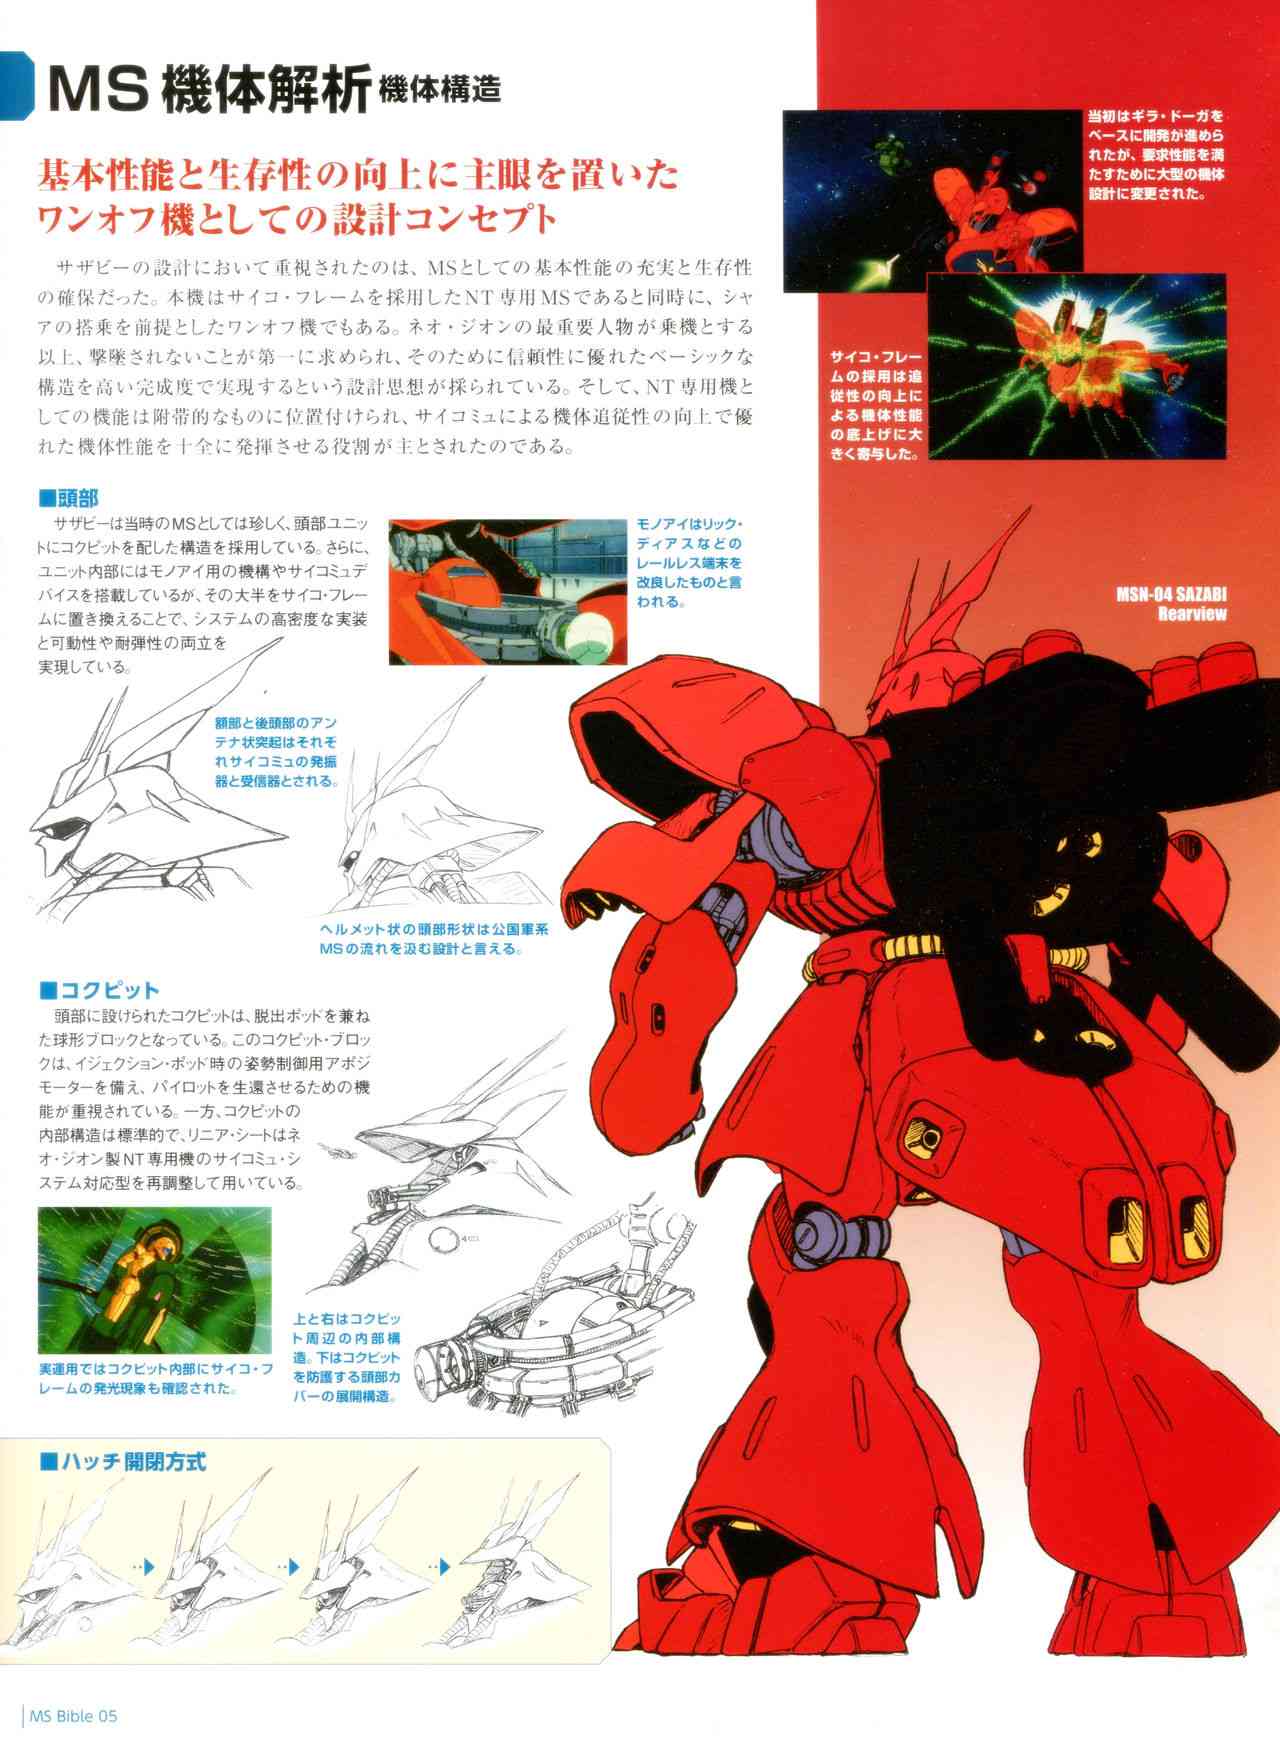 Gundam Mobile Suit Bible - 5卷 - 7